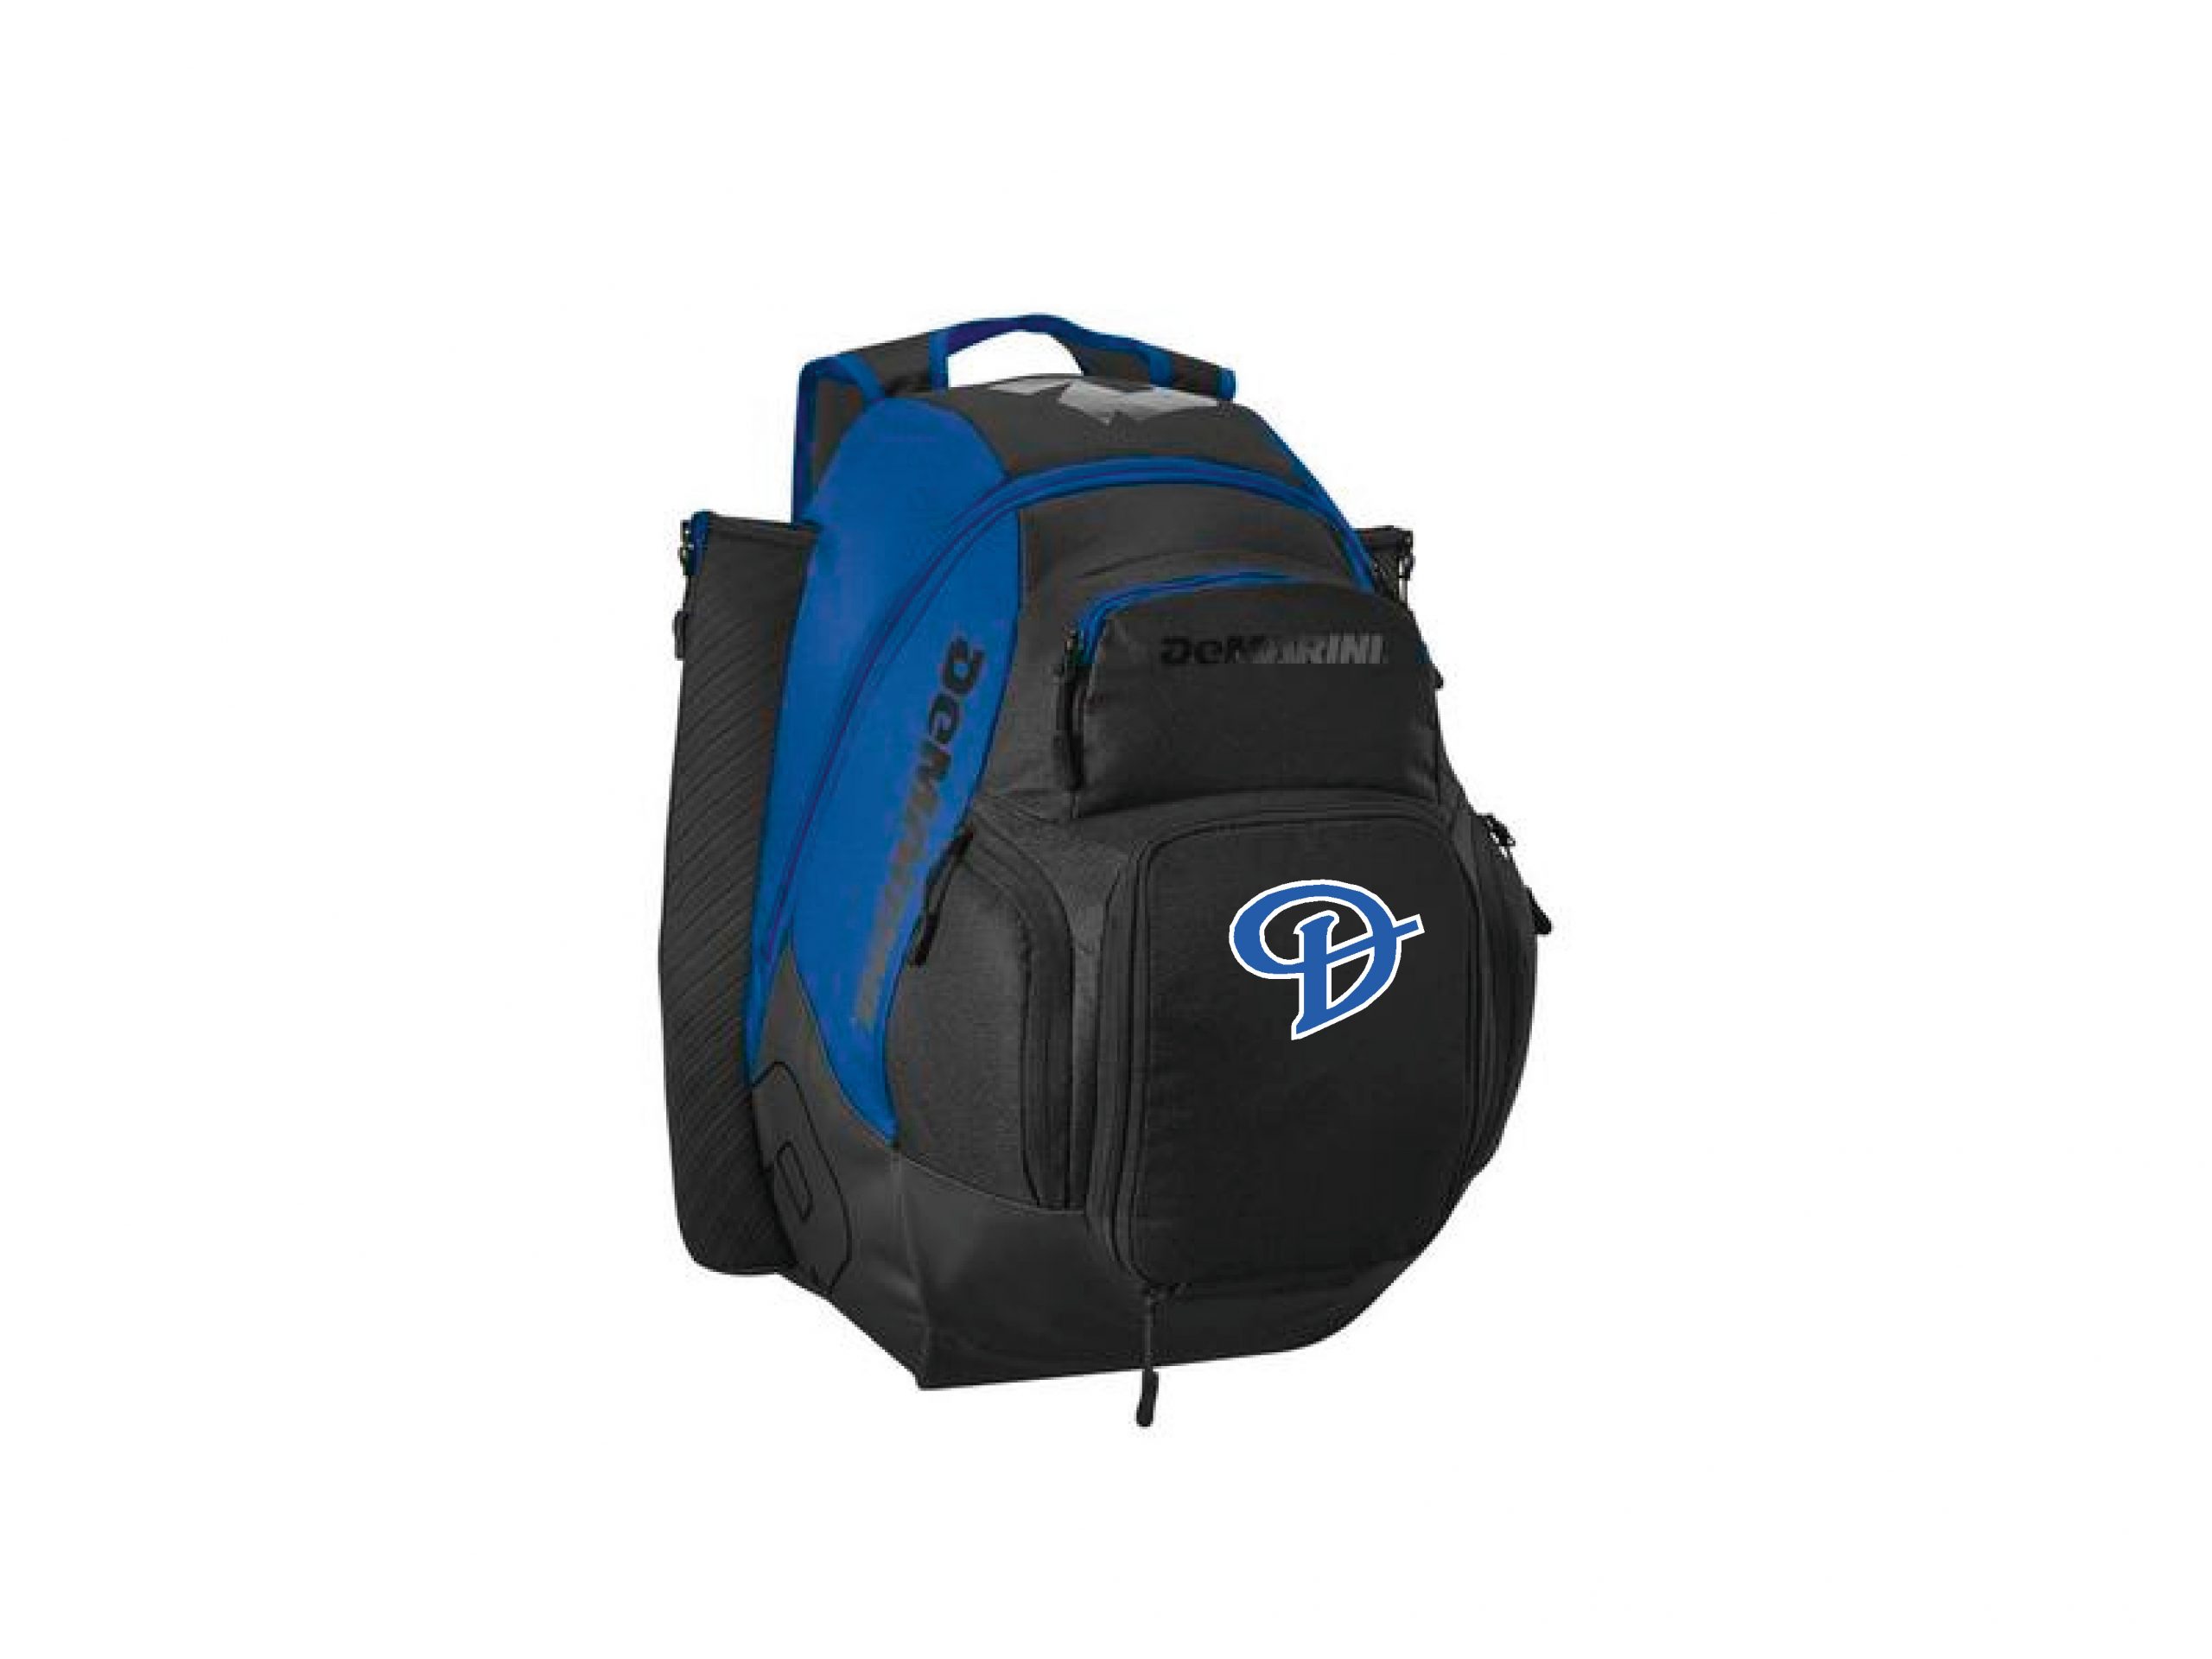 3 DeMarini Baseball Bags Worth a Look (2 New for 2022!) – HB Sports Inc.